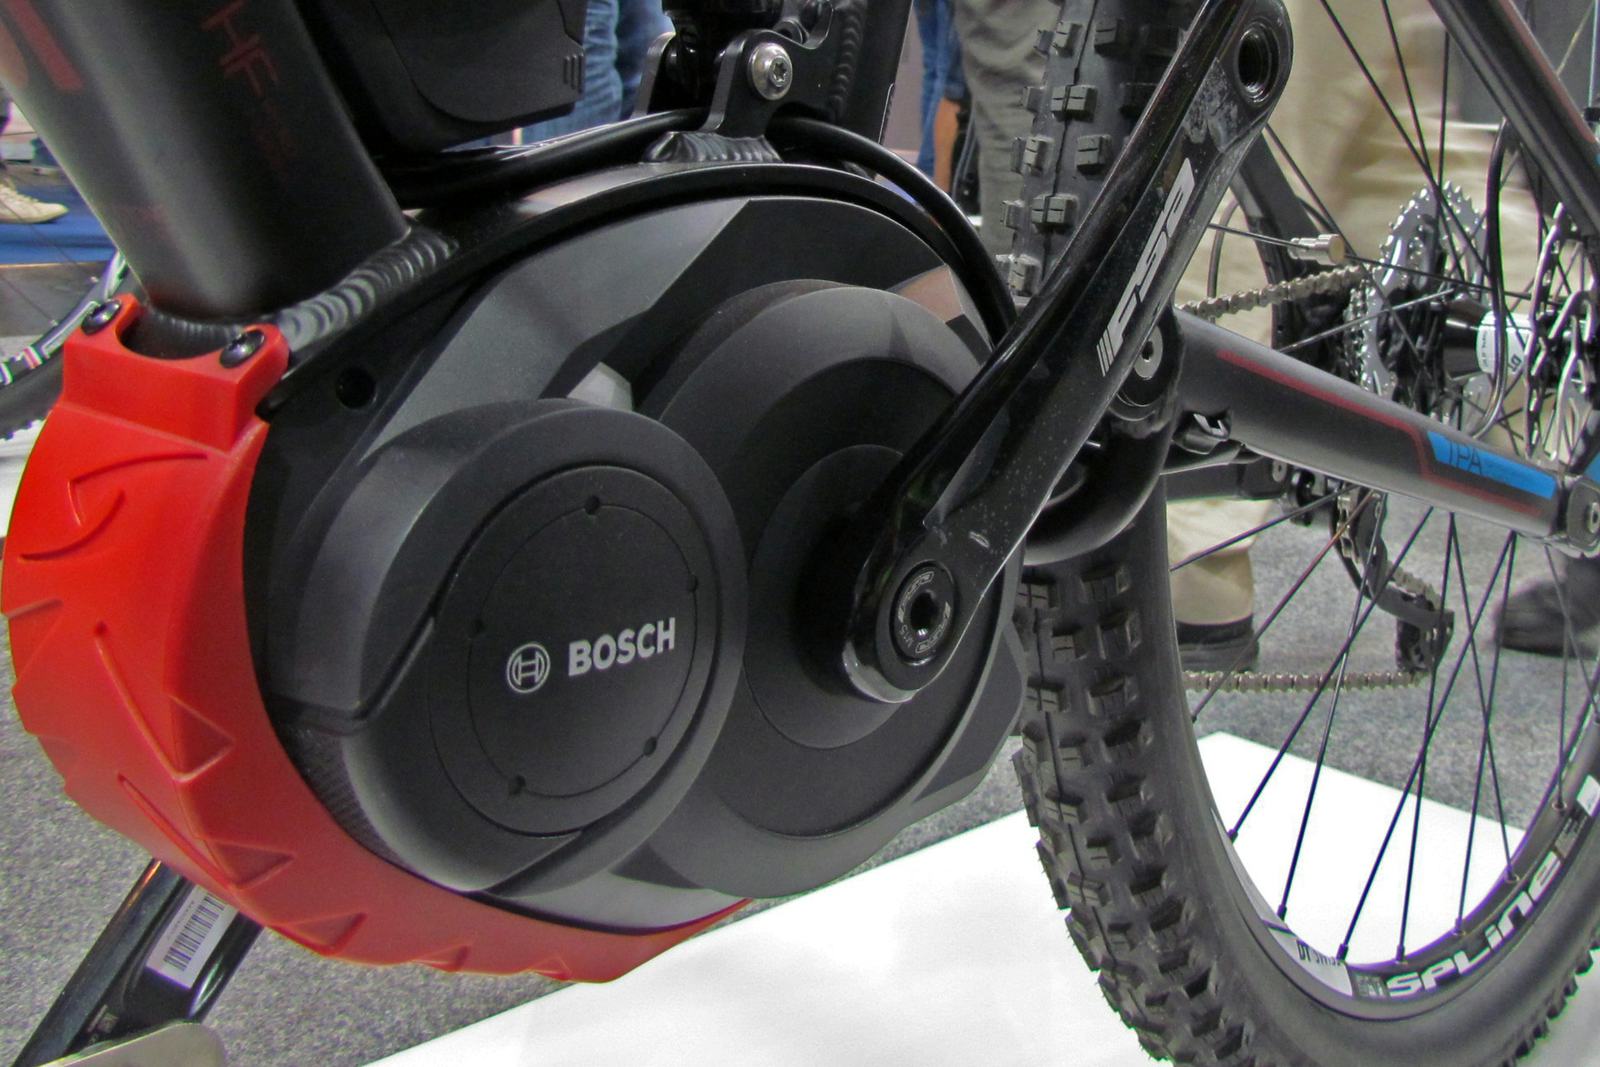 Speed Tuning Kits Threaten E-Bike Market Development